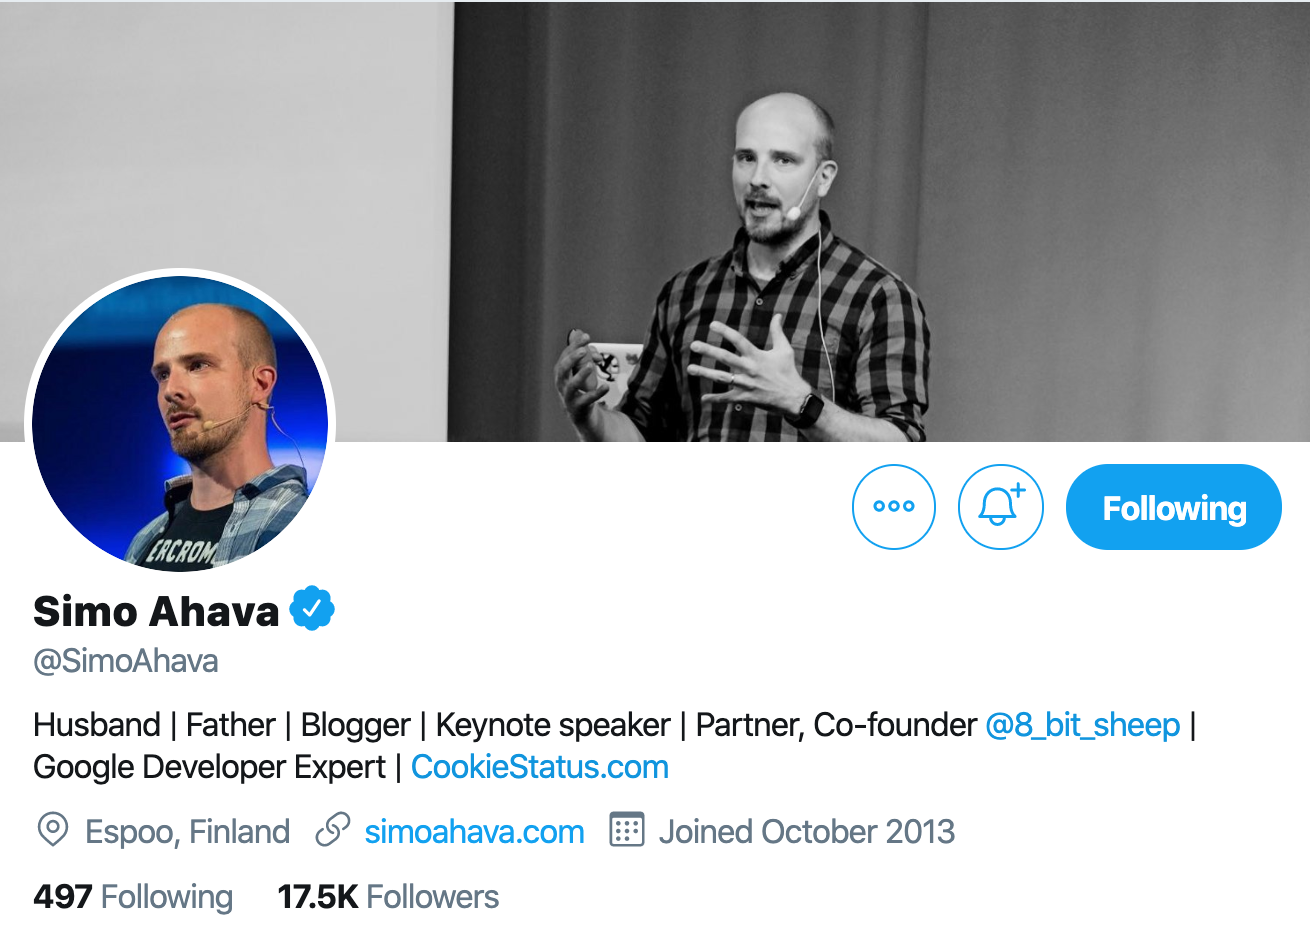 Simo Ahava. Marketer to follow on Twitter